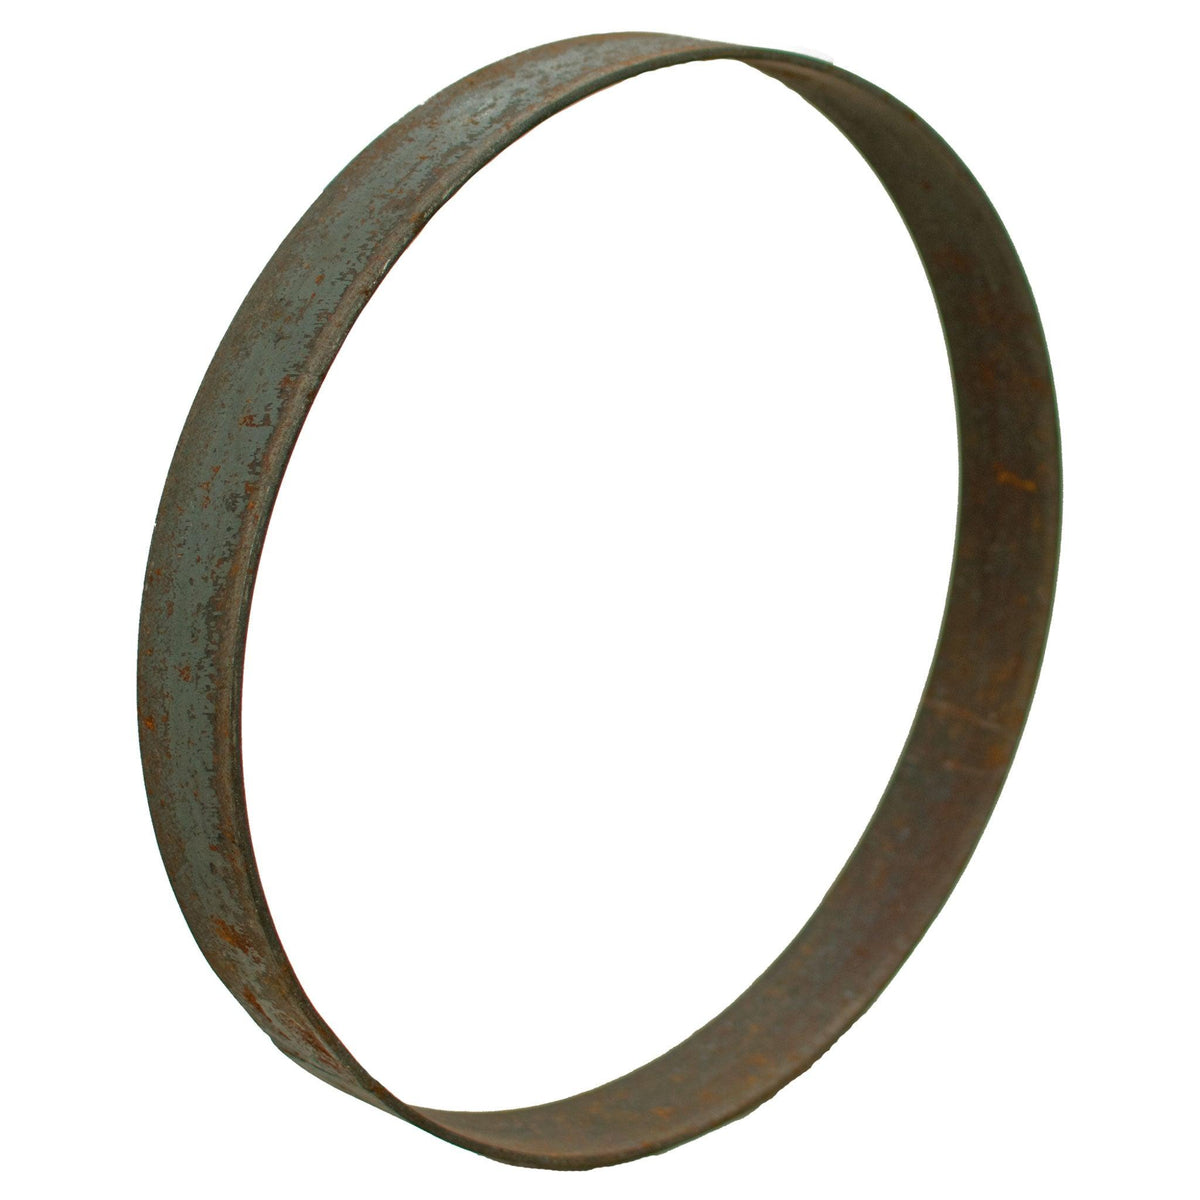 Rolled & Welded Steel Rings Fabrication